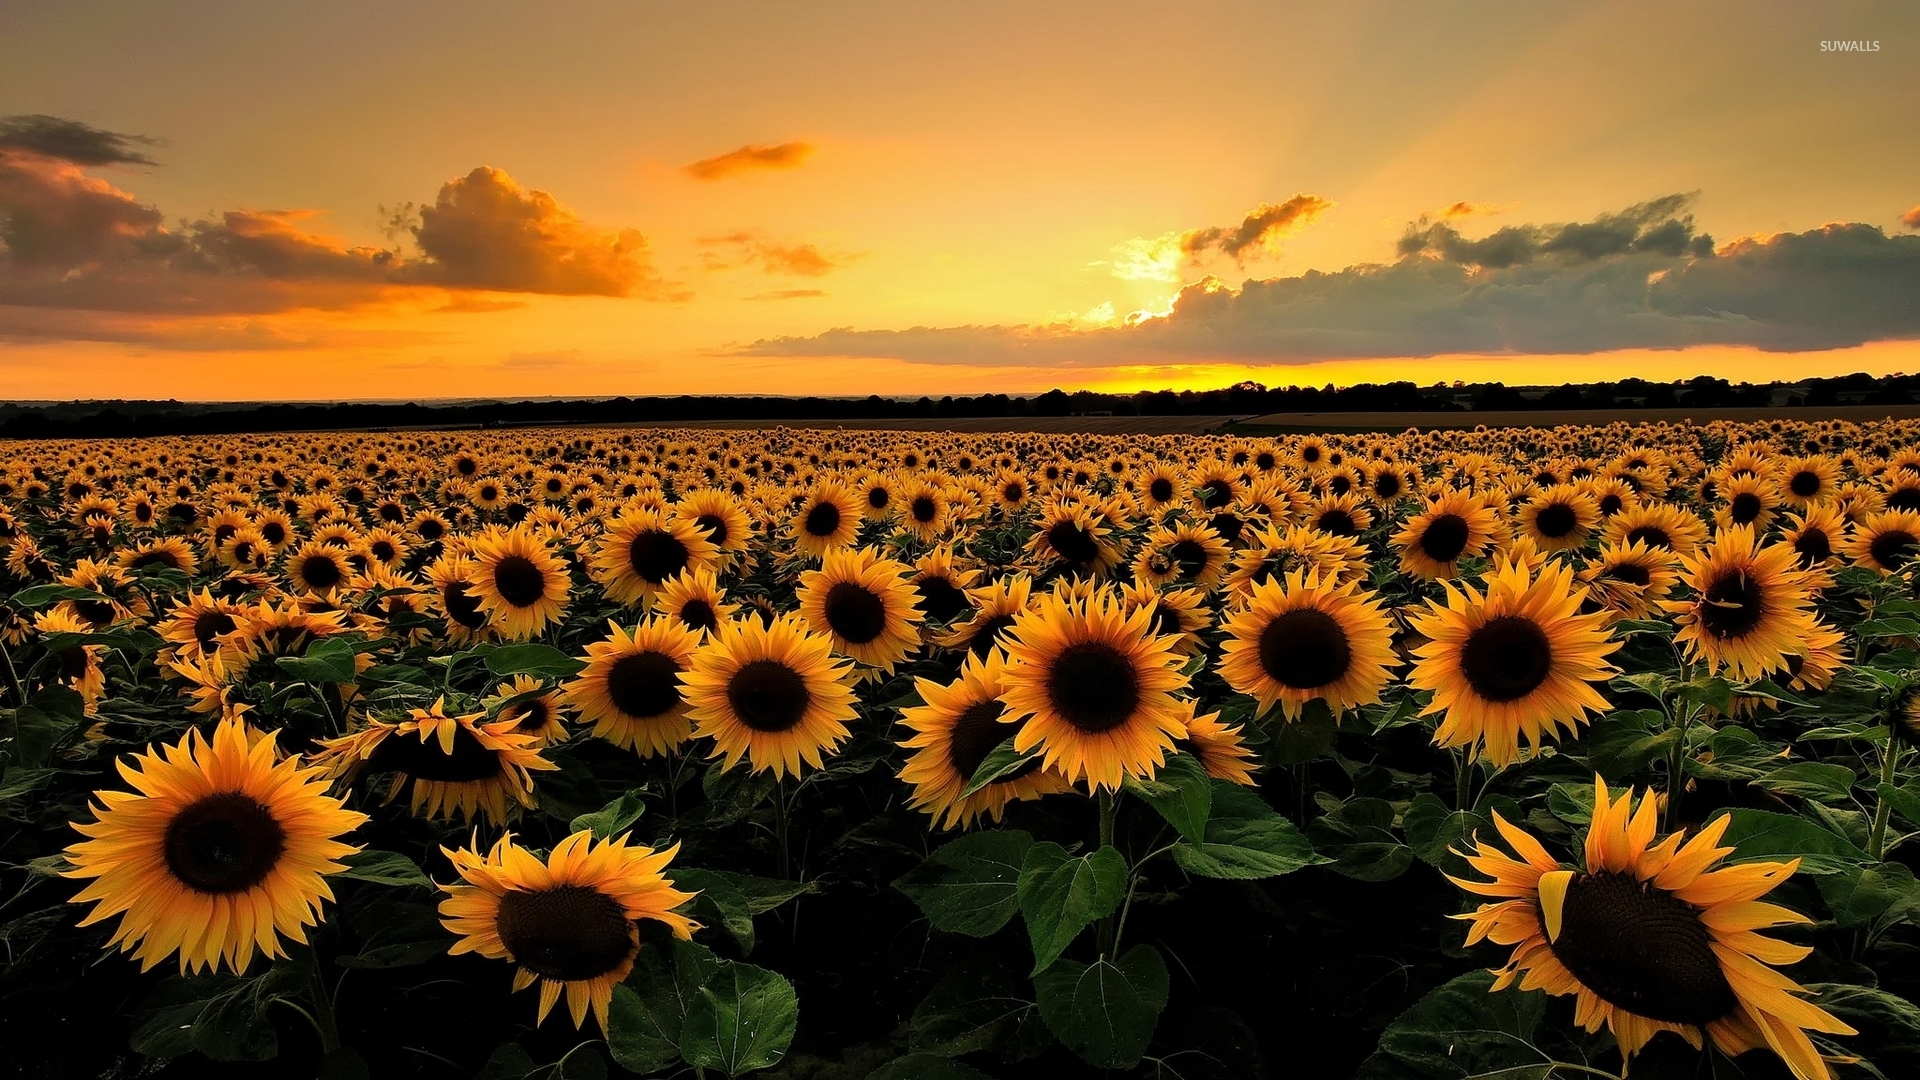 Sunset on the sunflower field wallpaper wallpaper